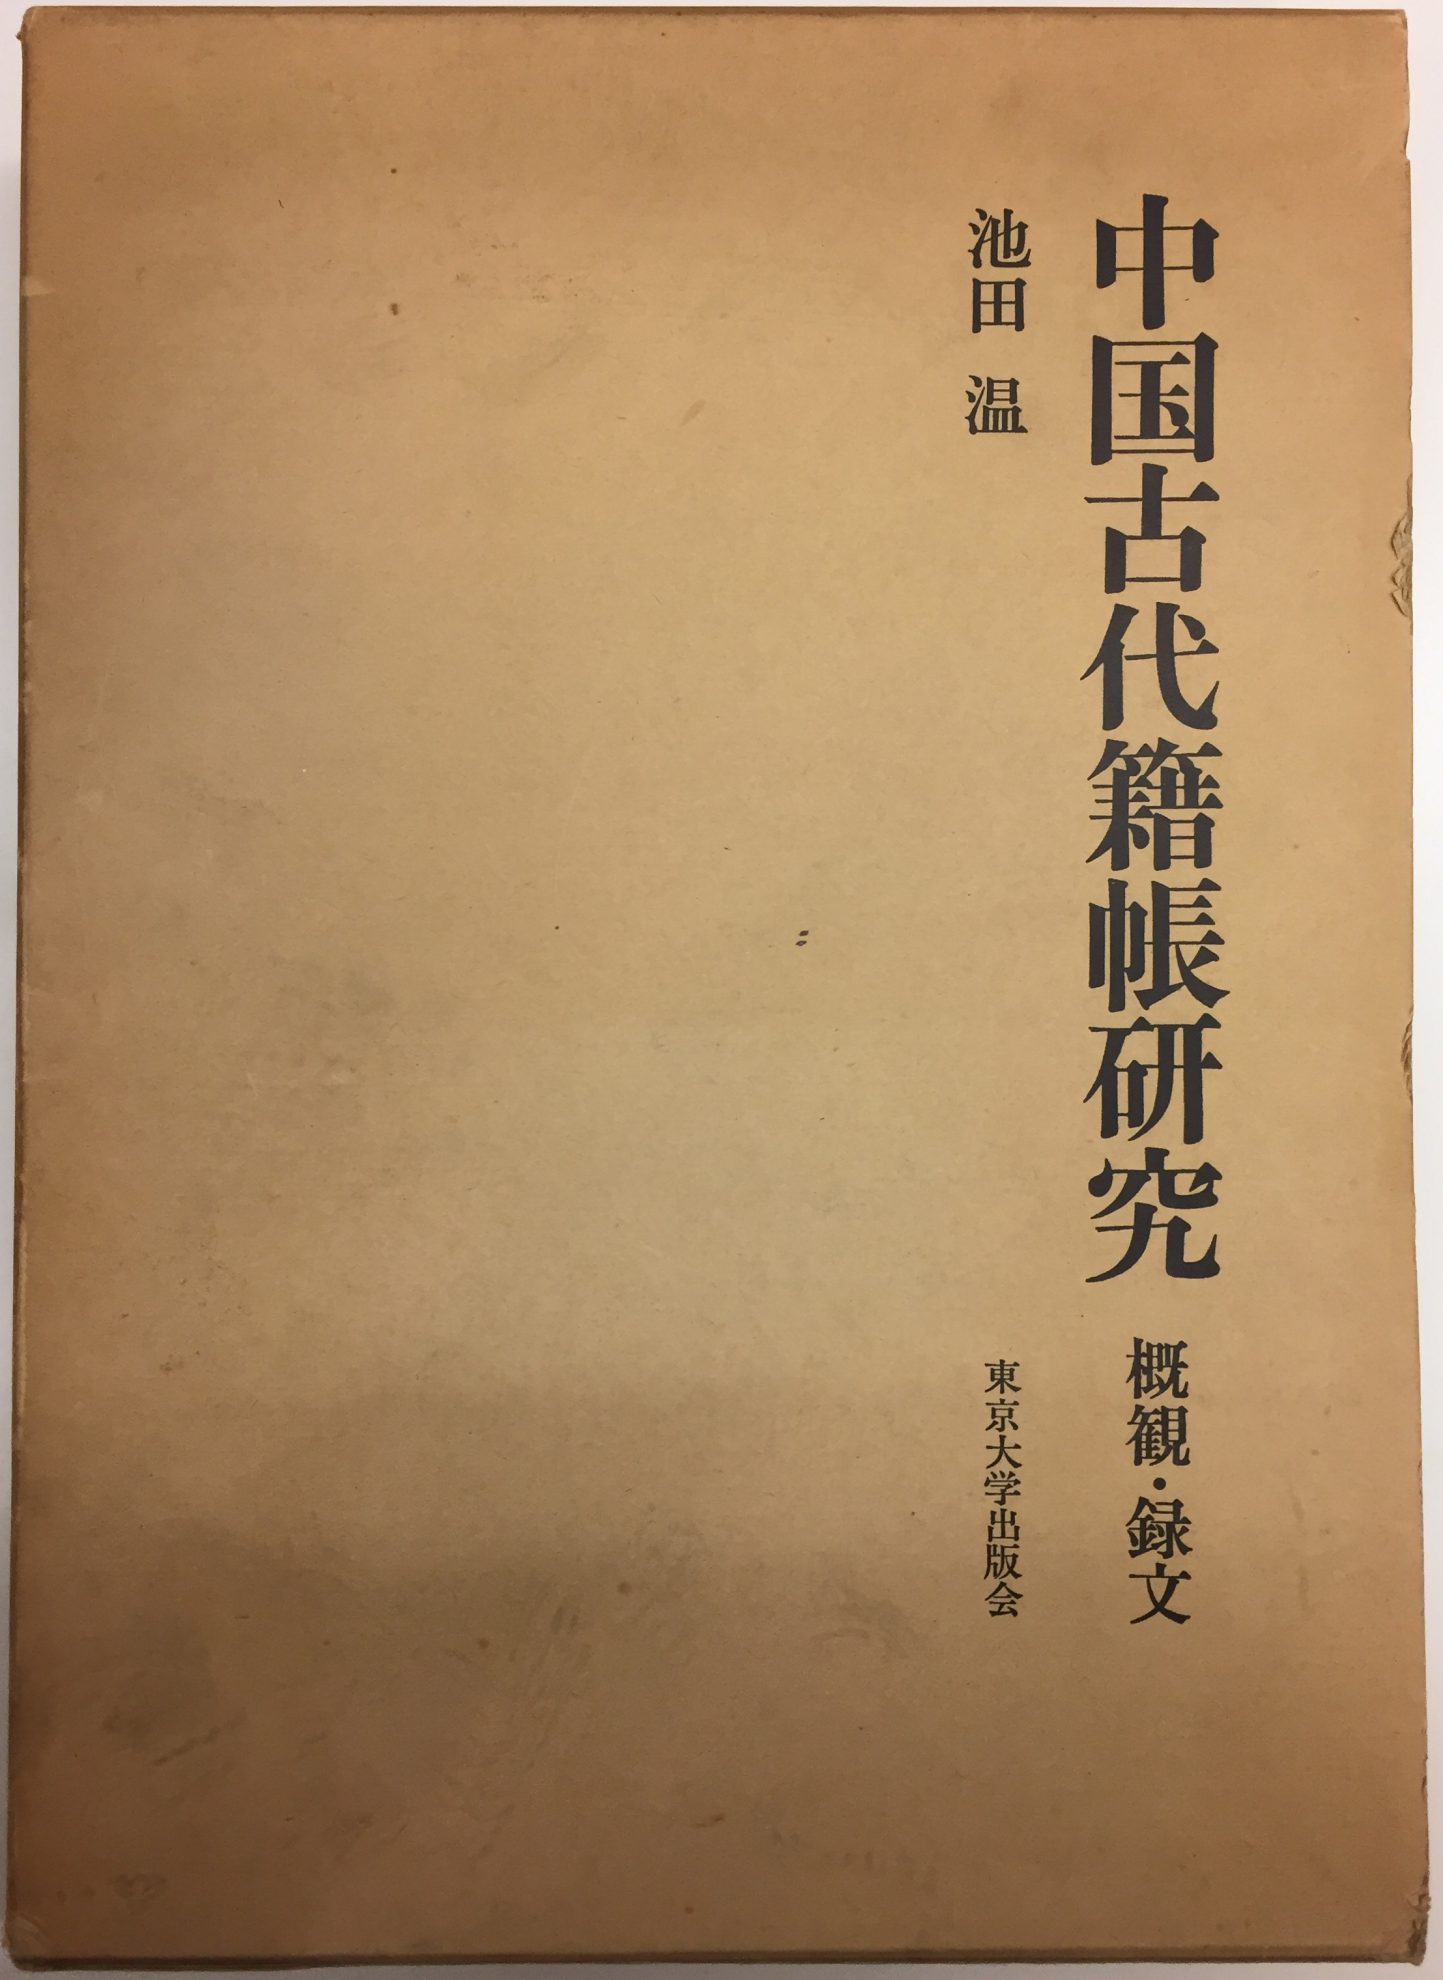 日本史大事典』ほか歴史・仏教関係の古書を出張買取 | 東京神田神保町 